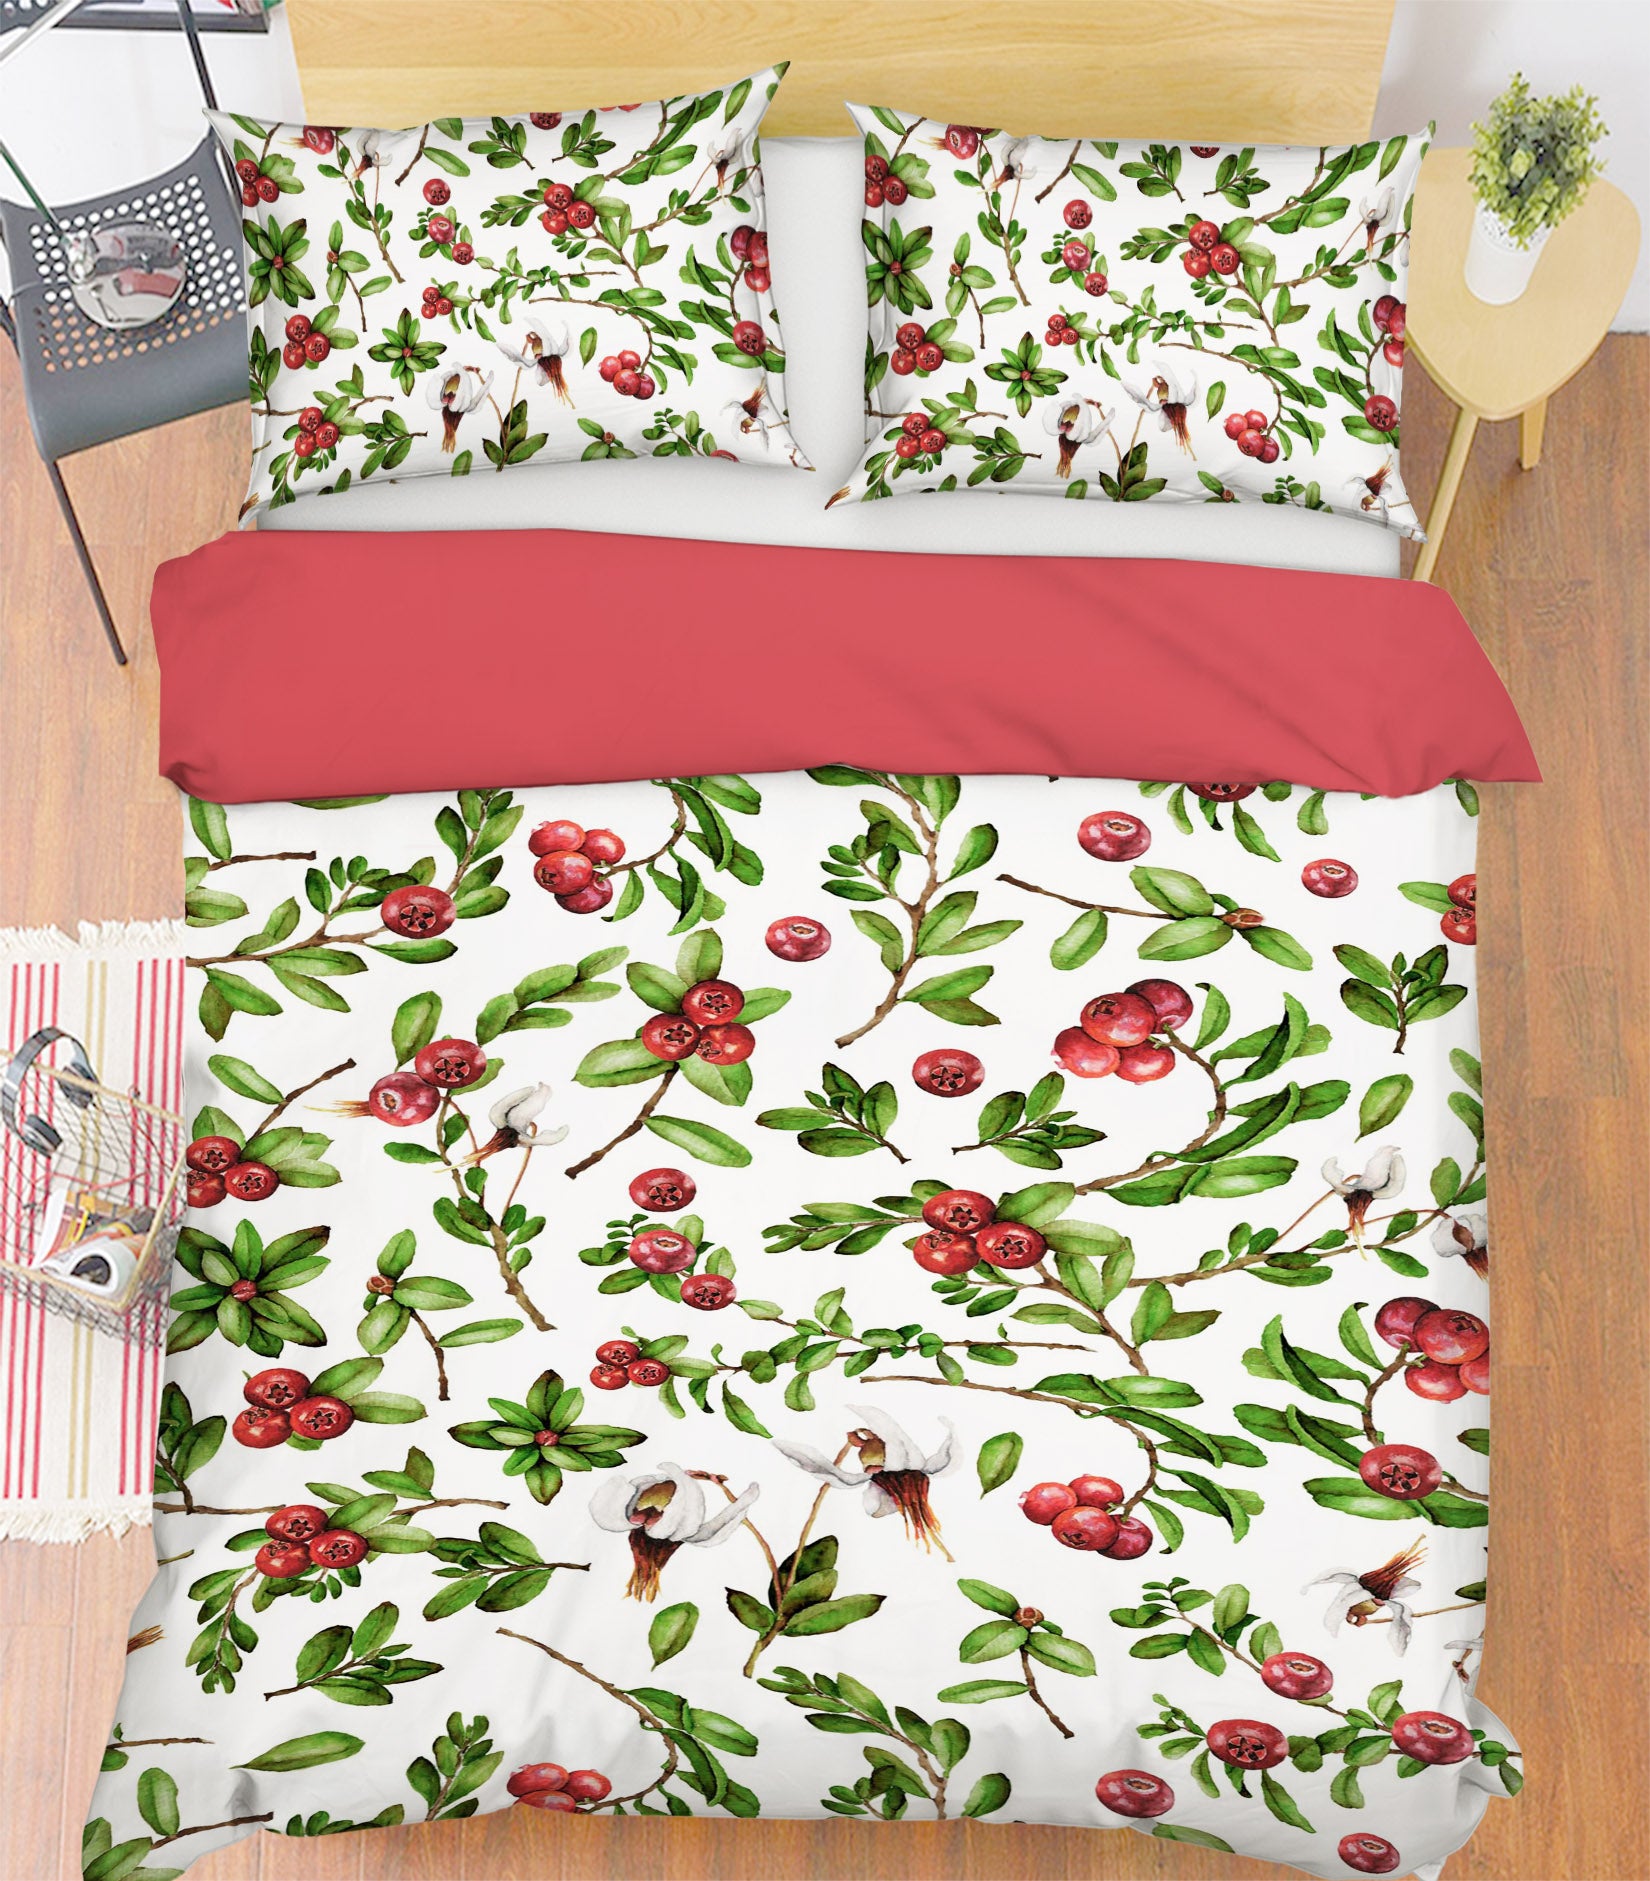 3D Fruit Leaves 18209 Uta Naumann Bedding Bed Pillowcases Quilt